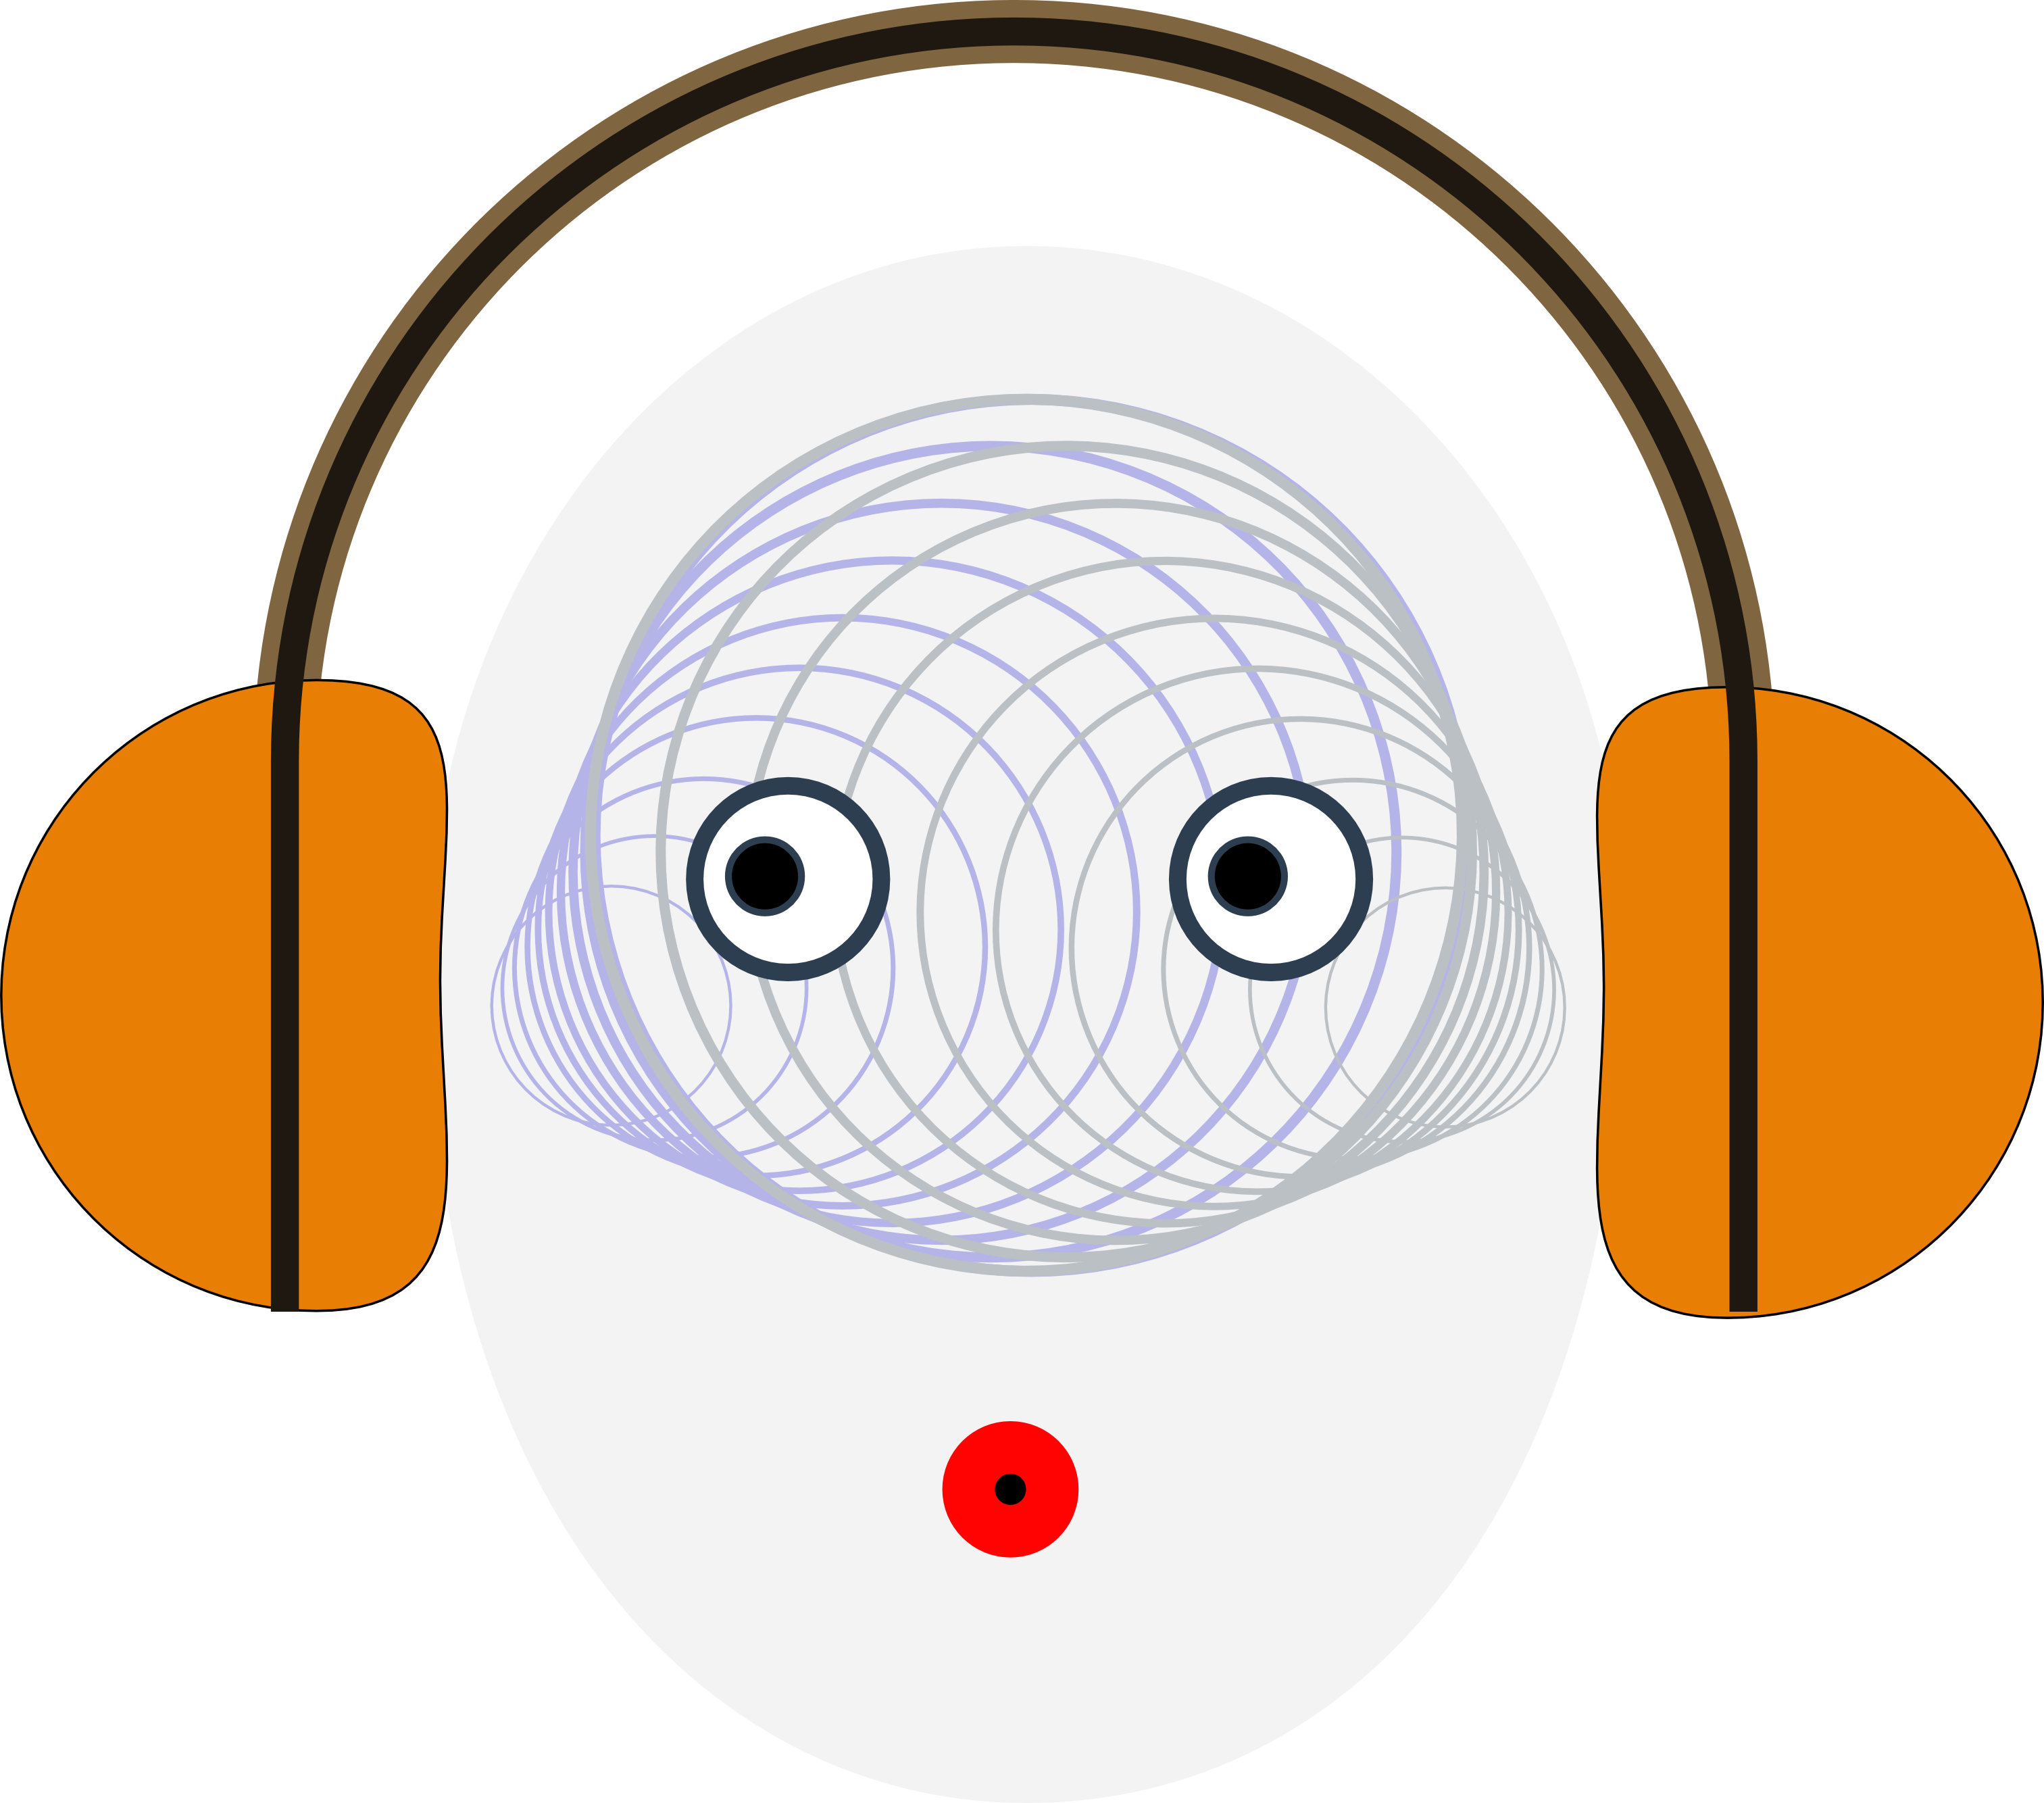 binaural beats headphone guy illustration